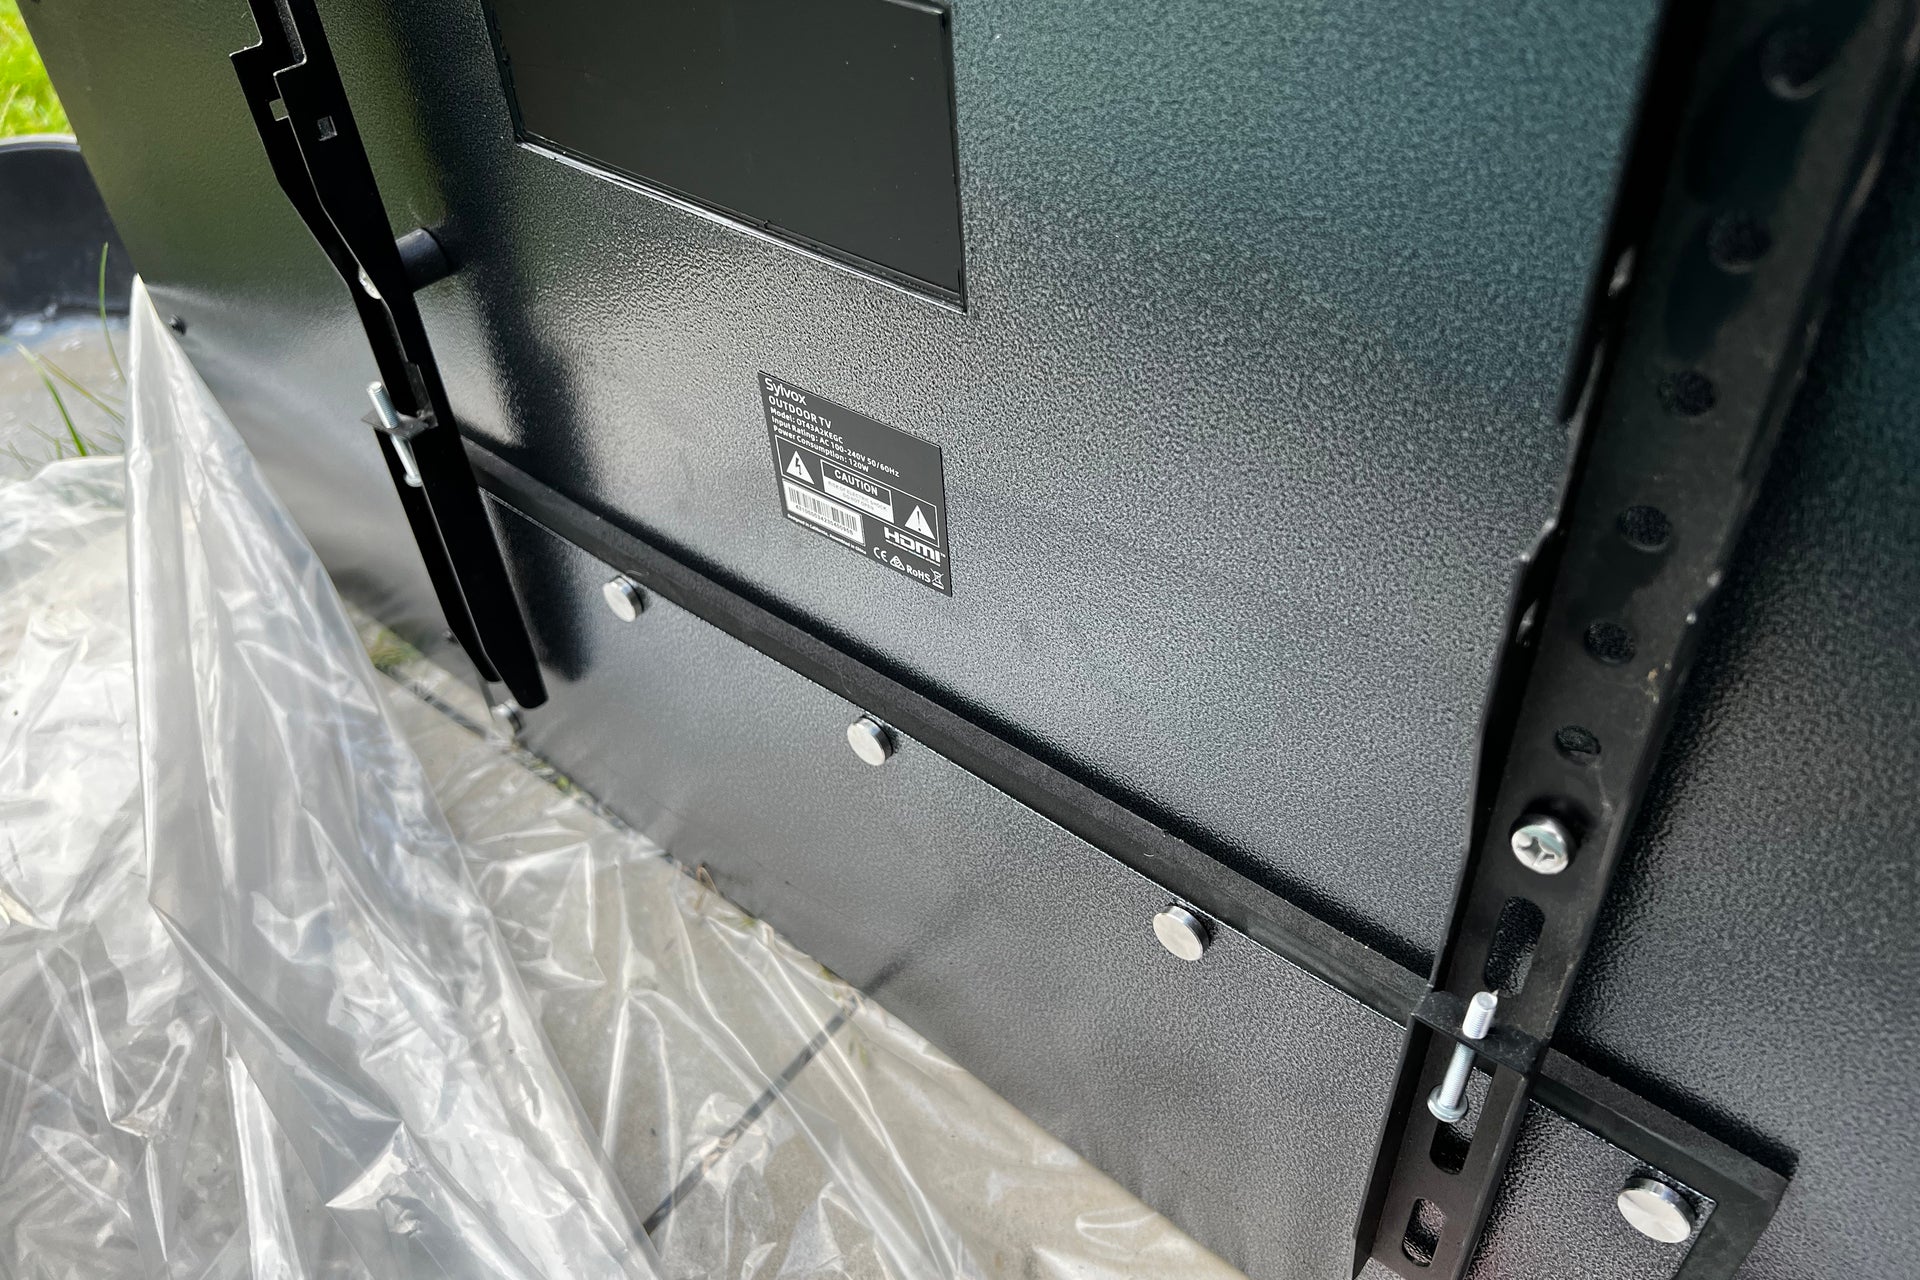 Sylvox 43-inch Deck Pro Outdoor TV mount